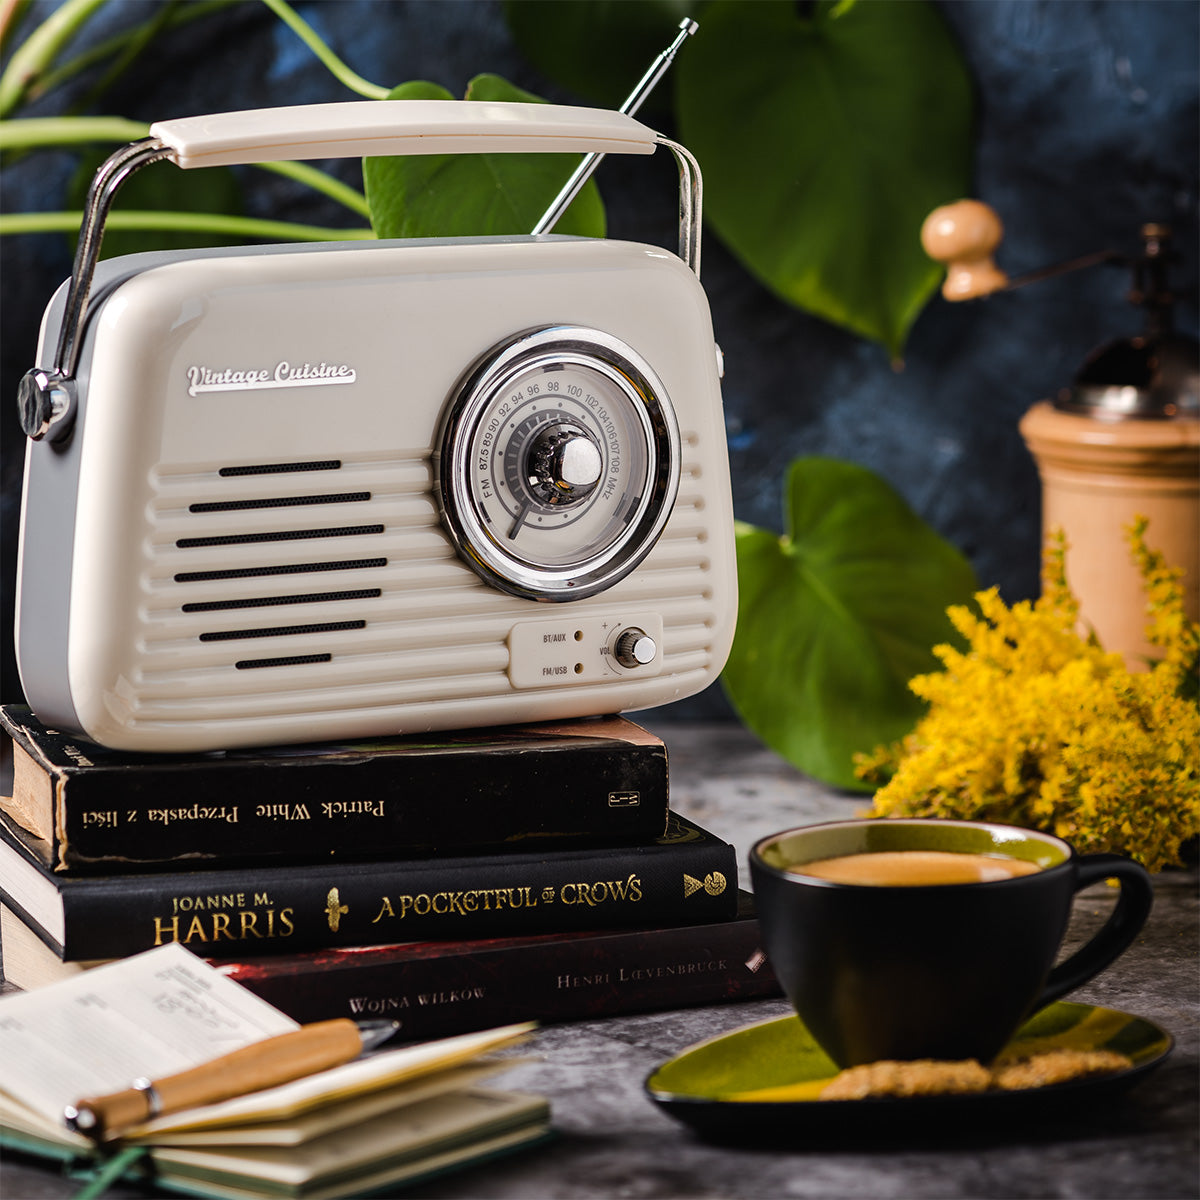 Chrome retro radio with bluetooth speaker by Vintage Cuisine